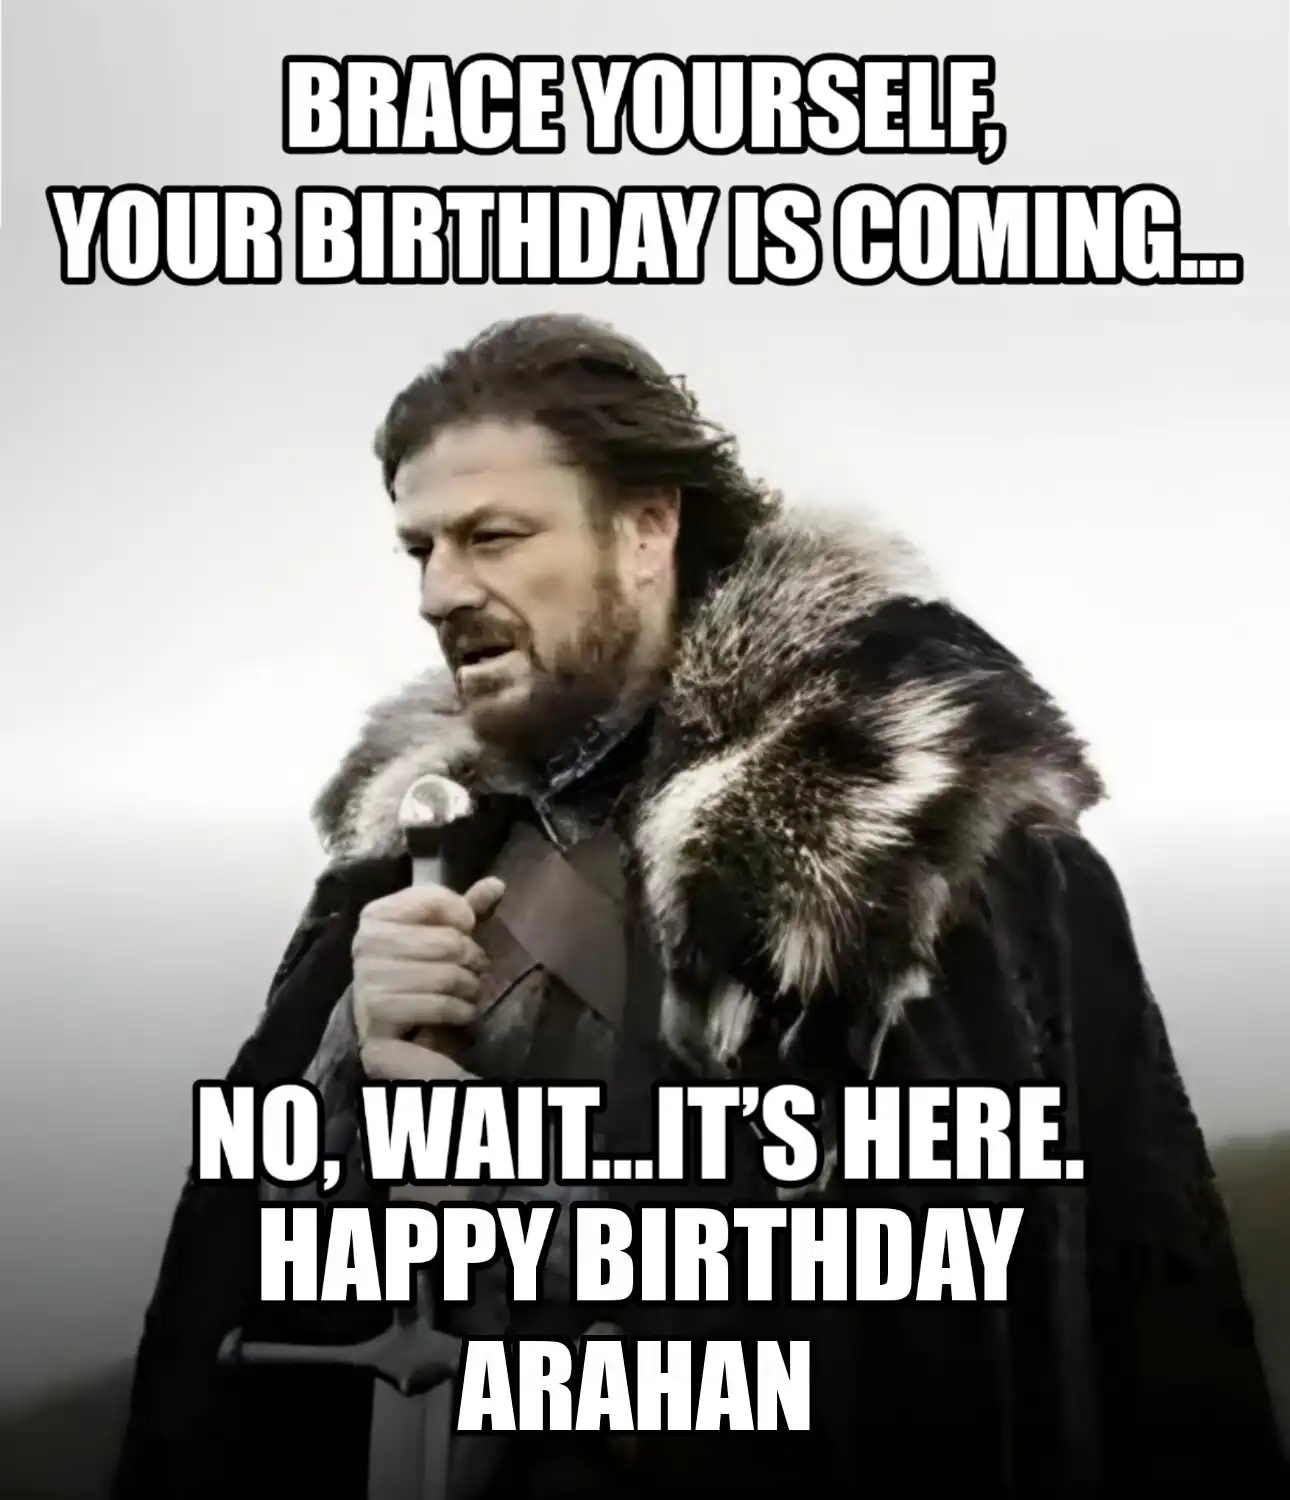 Happy Birthday Arahan Brace Yourself Your Birthday Is Coming Meme